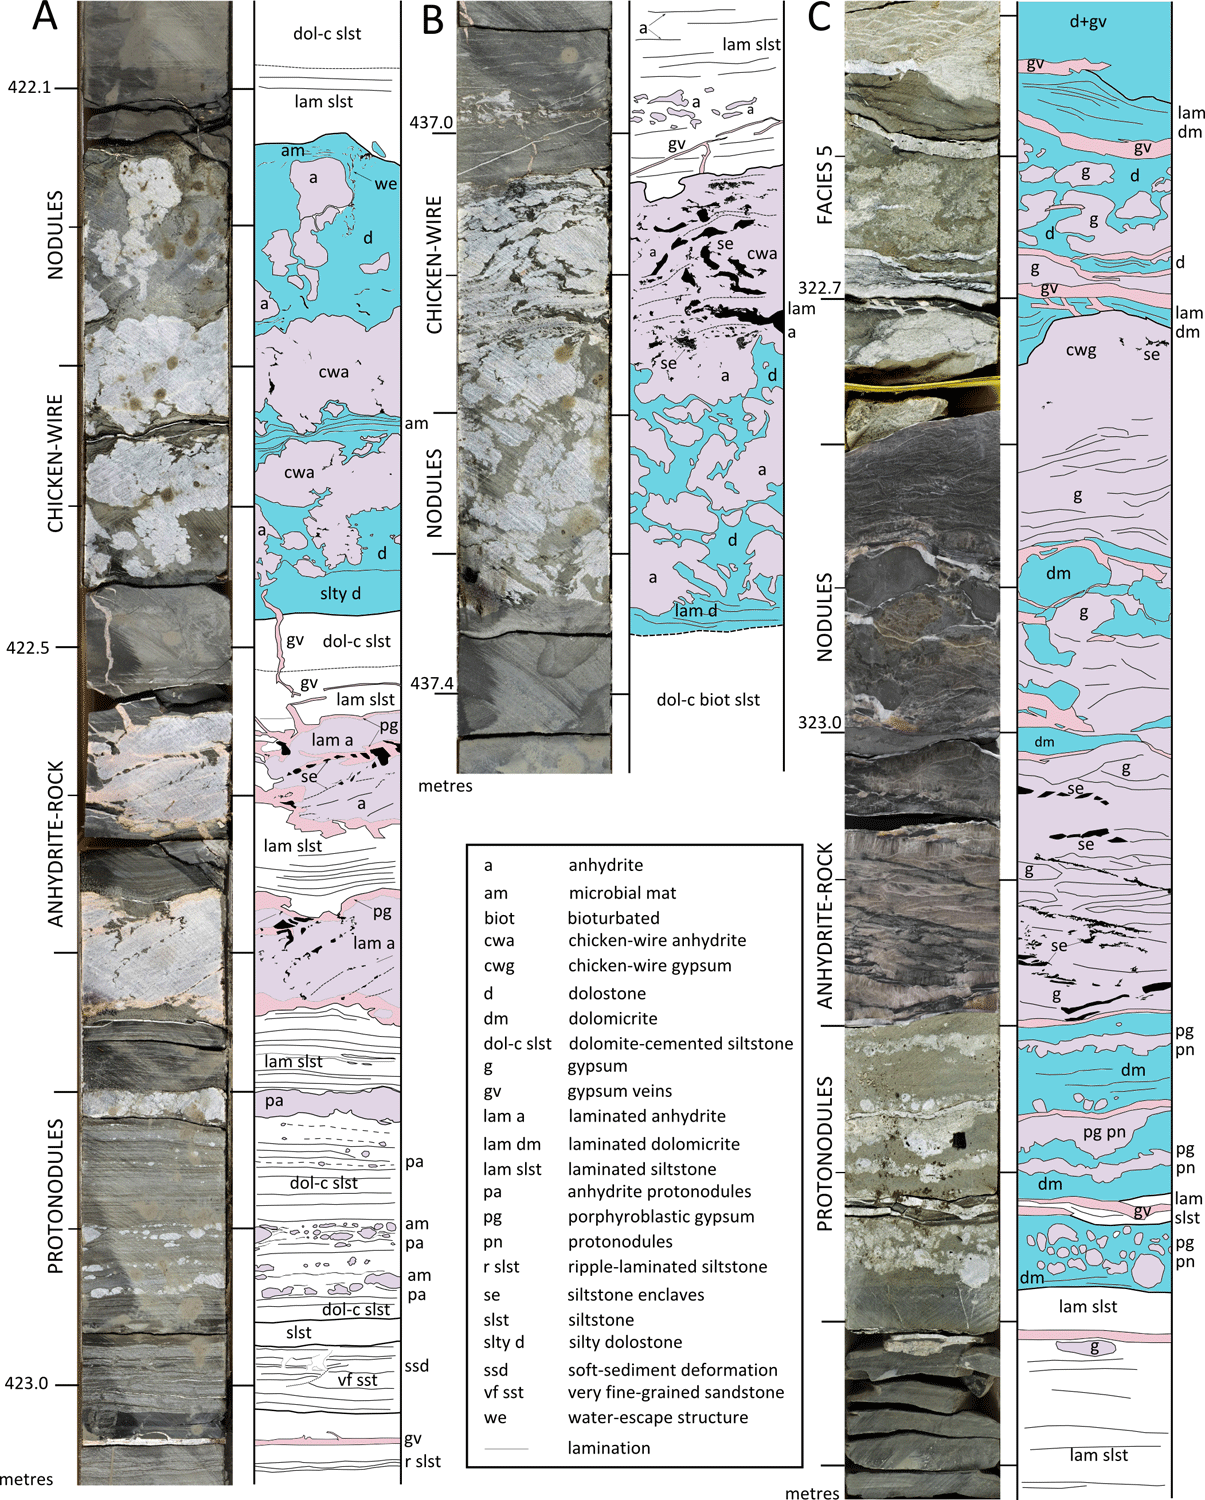 Examples of evaporite deposits in the Norham core.